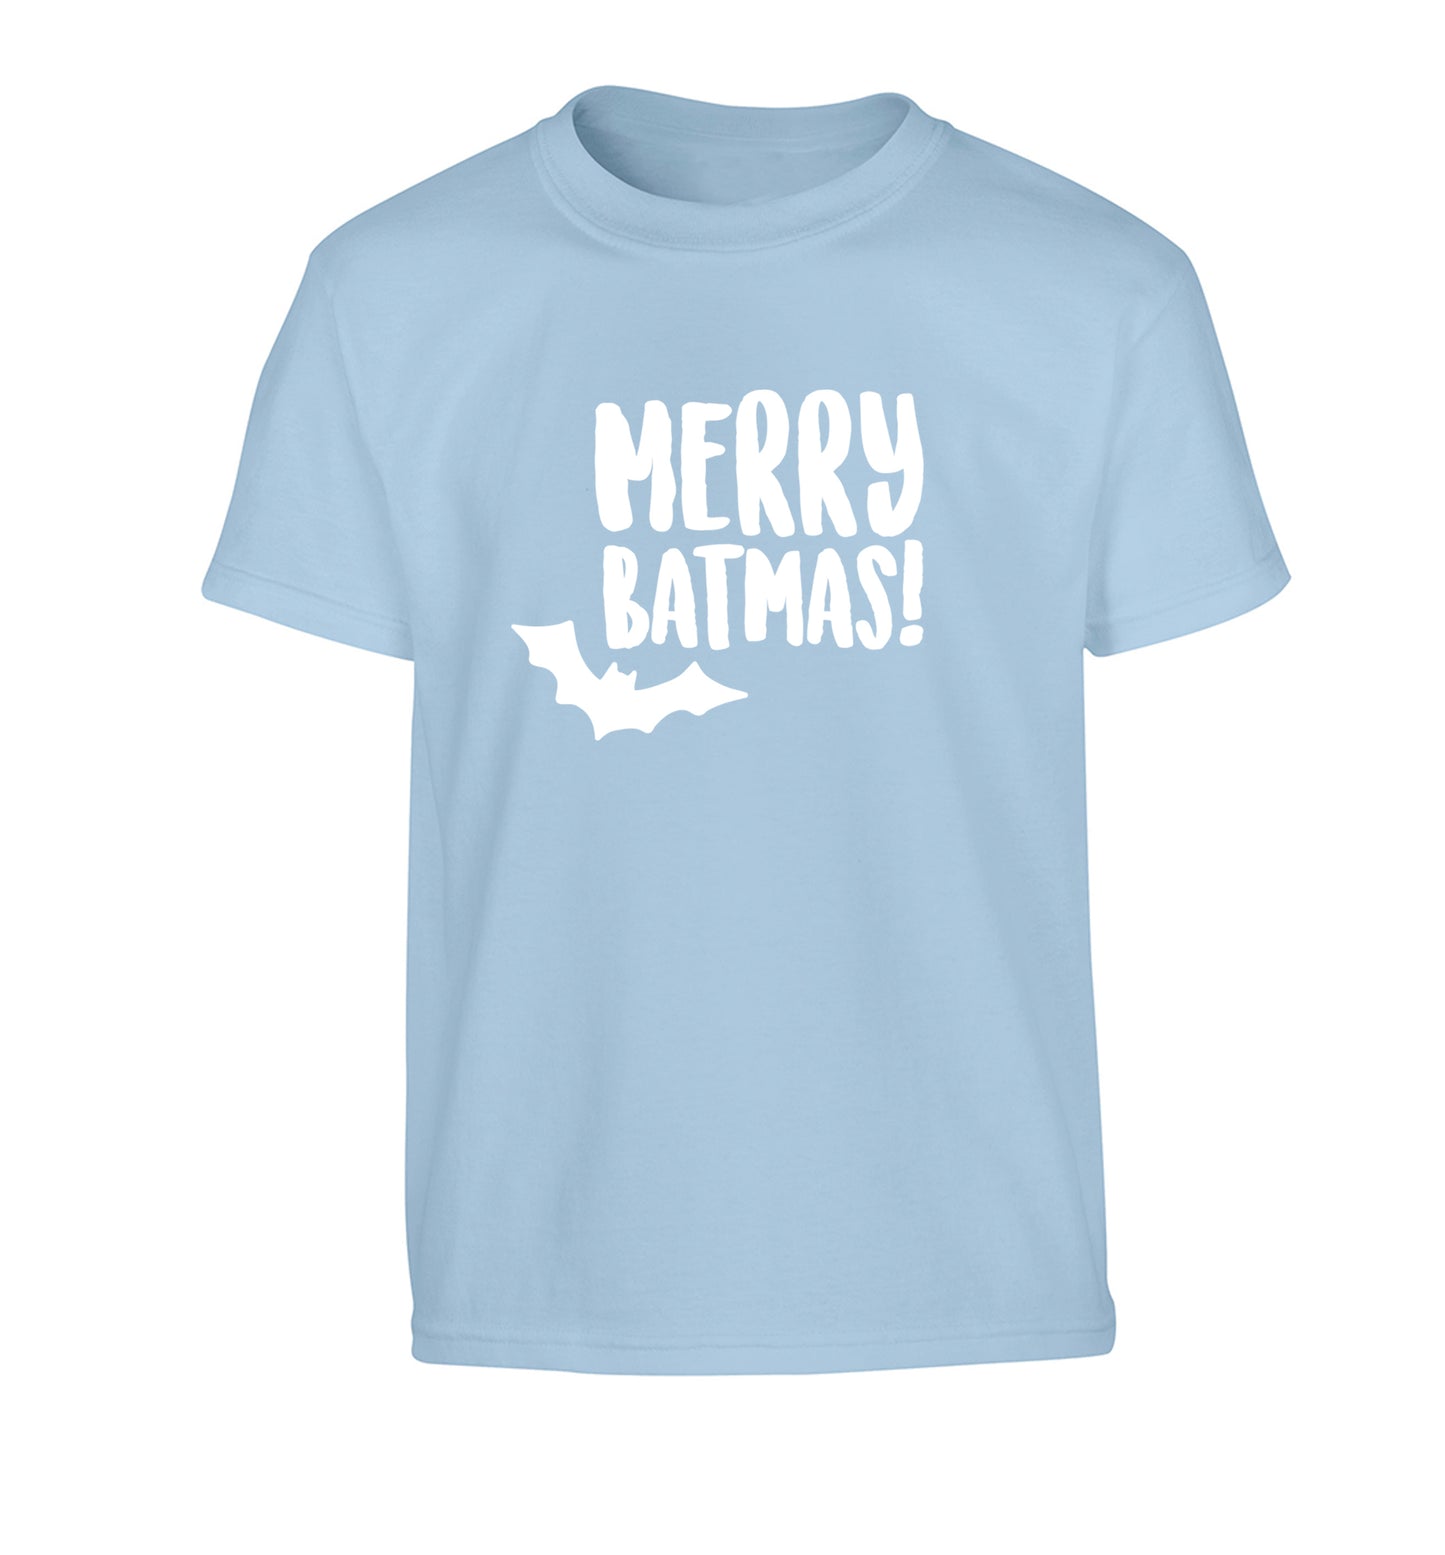 Merry Batmas Children's light blue Tshirt 12-14 Years